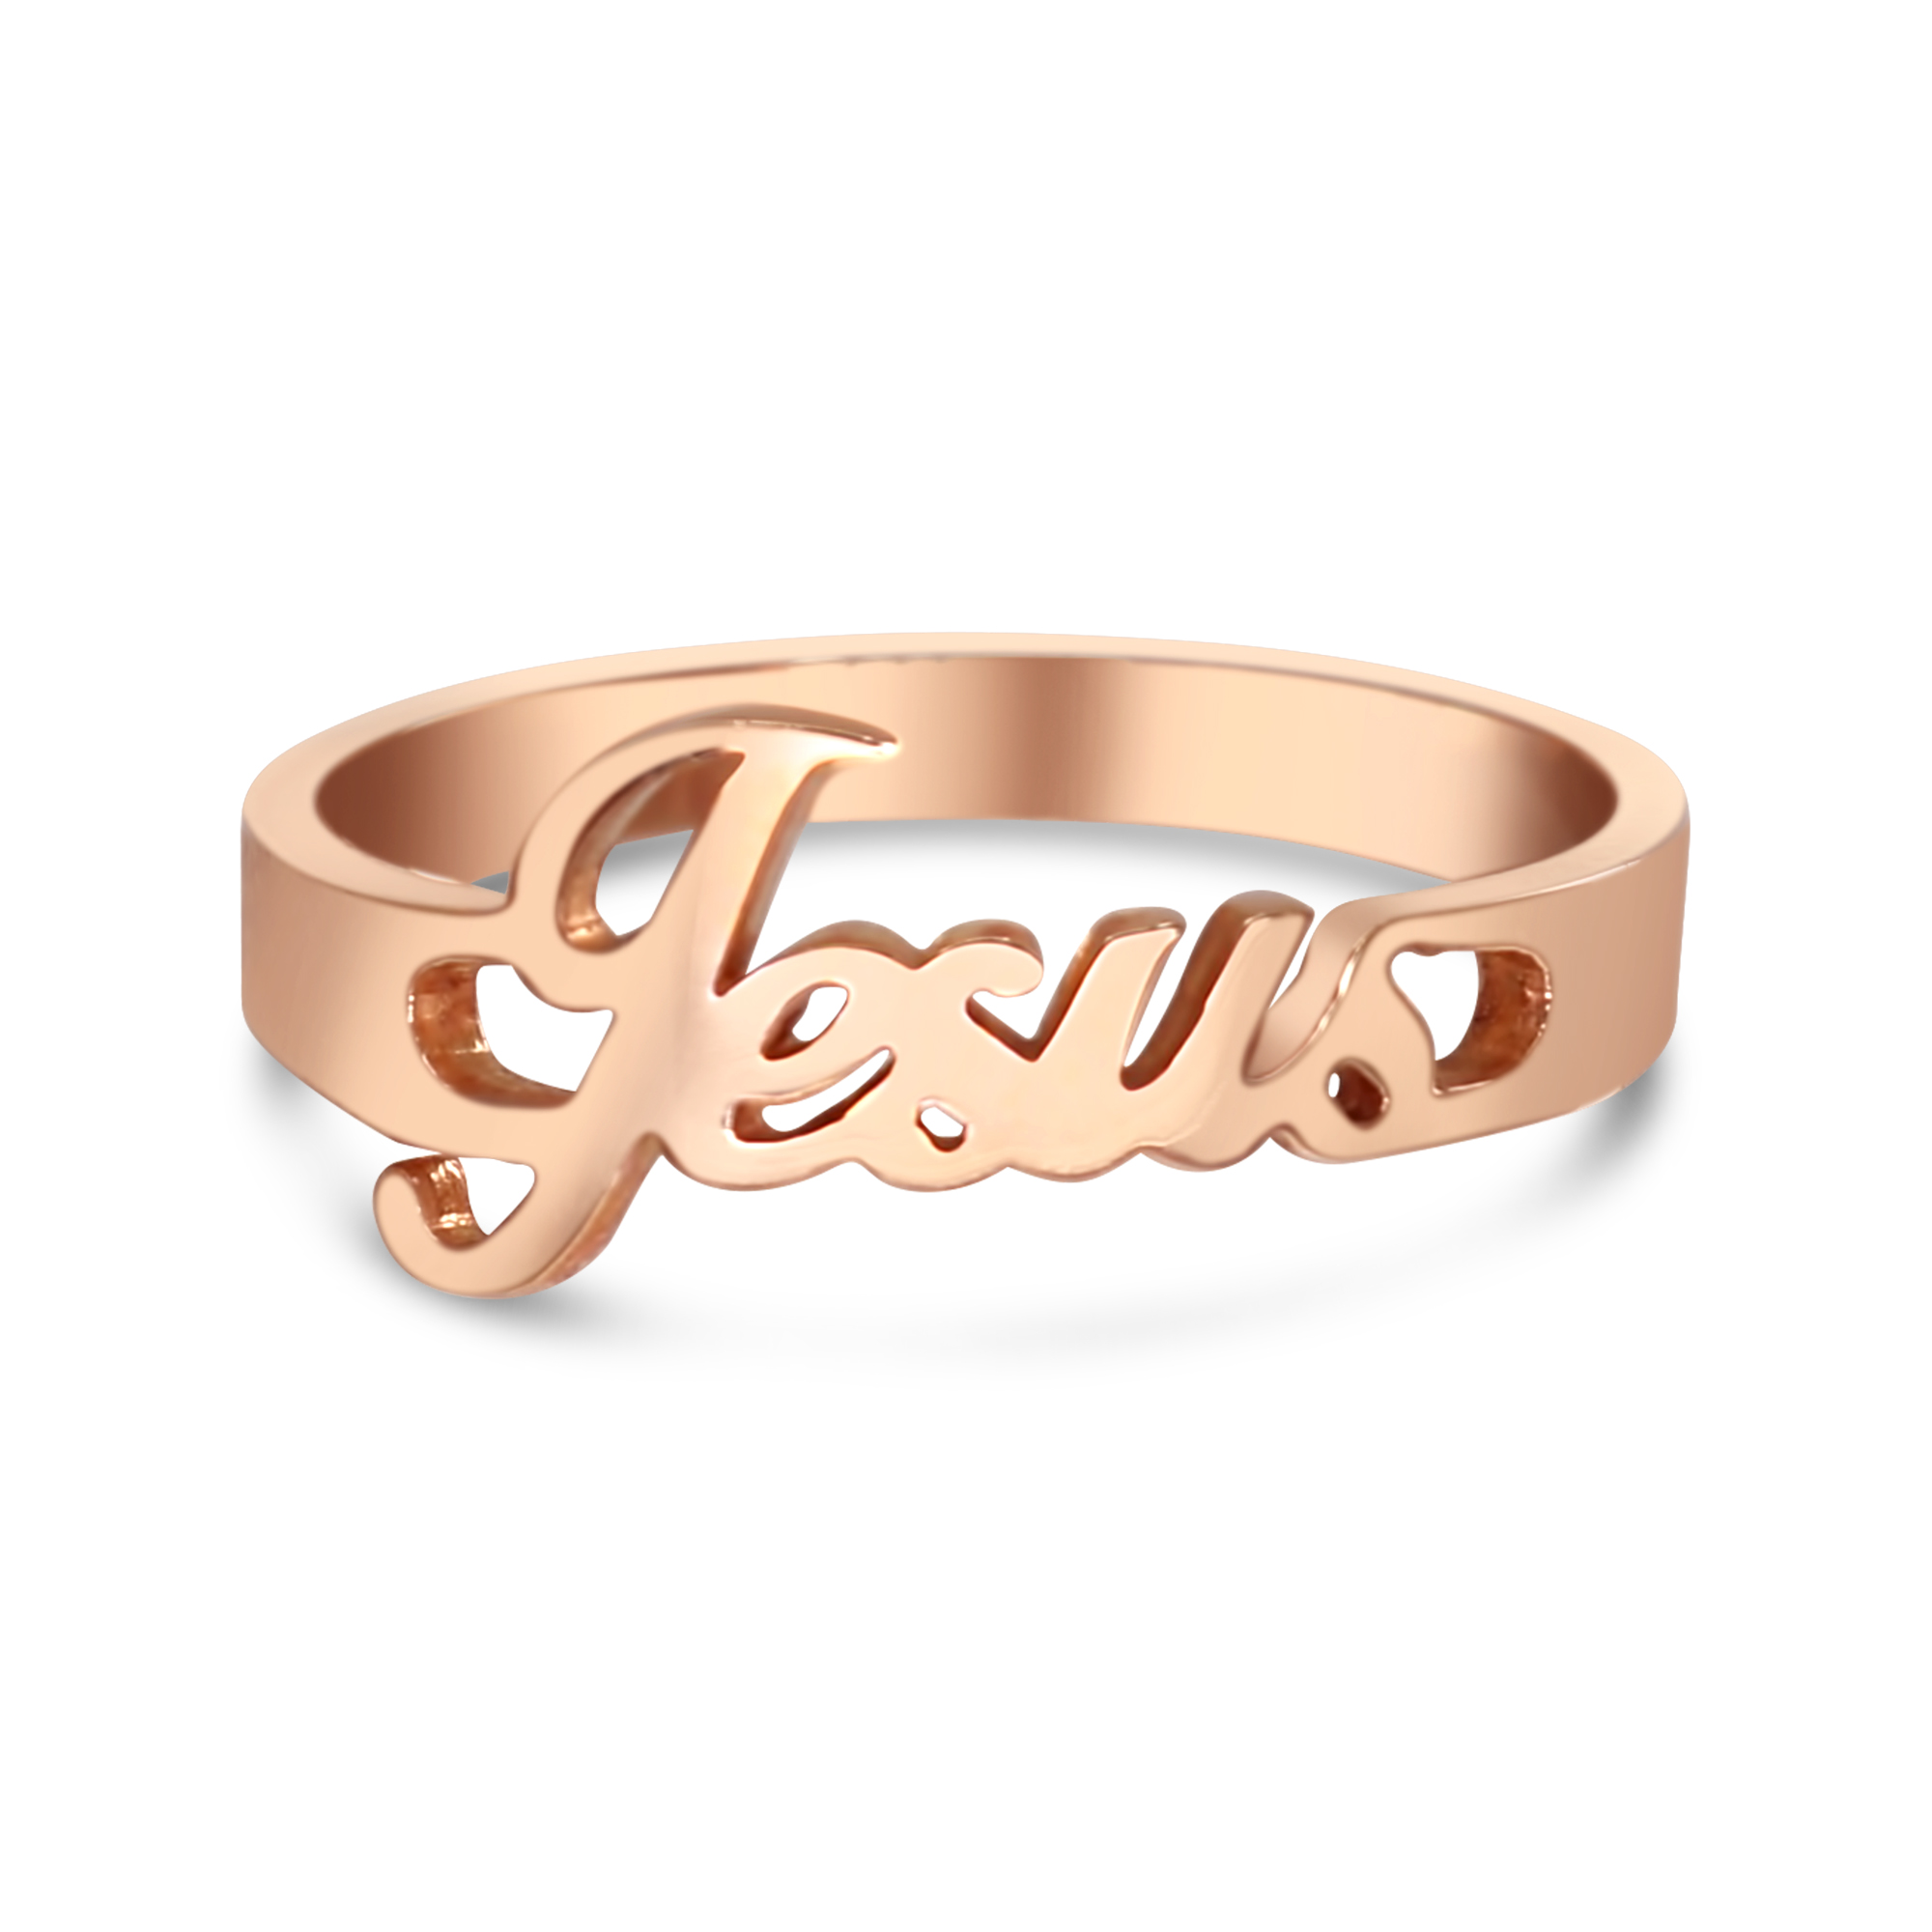 Golden Jesus ring